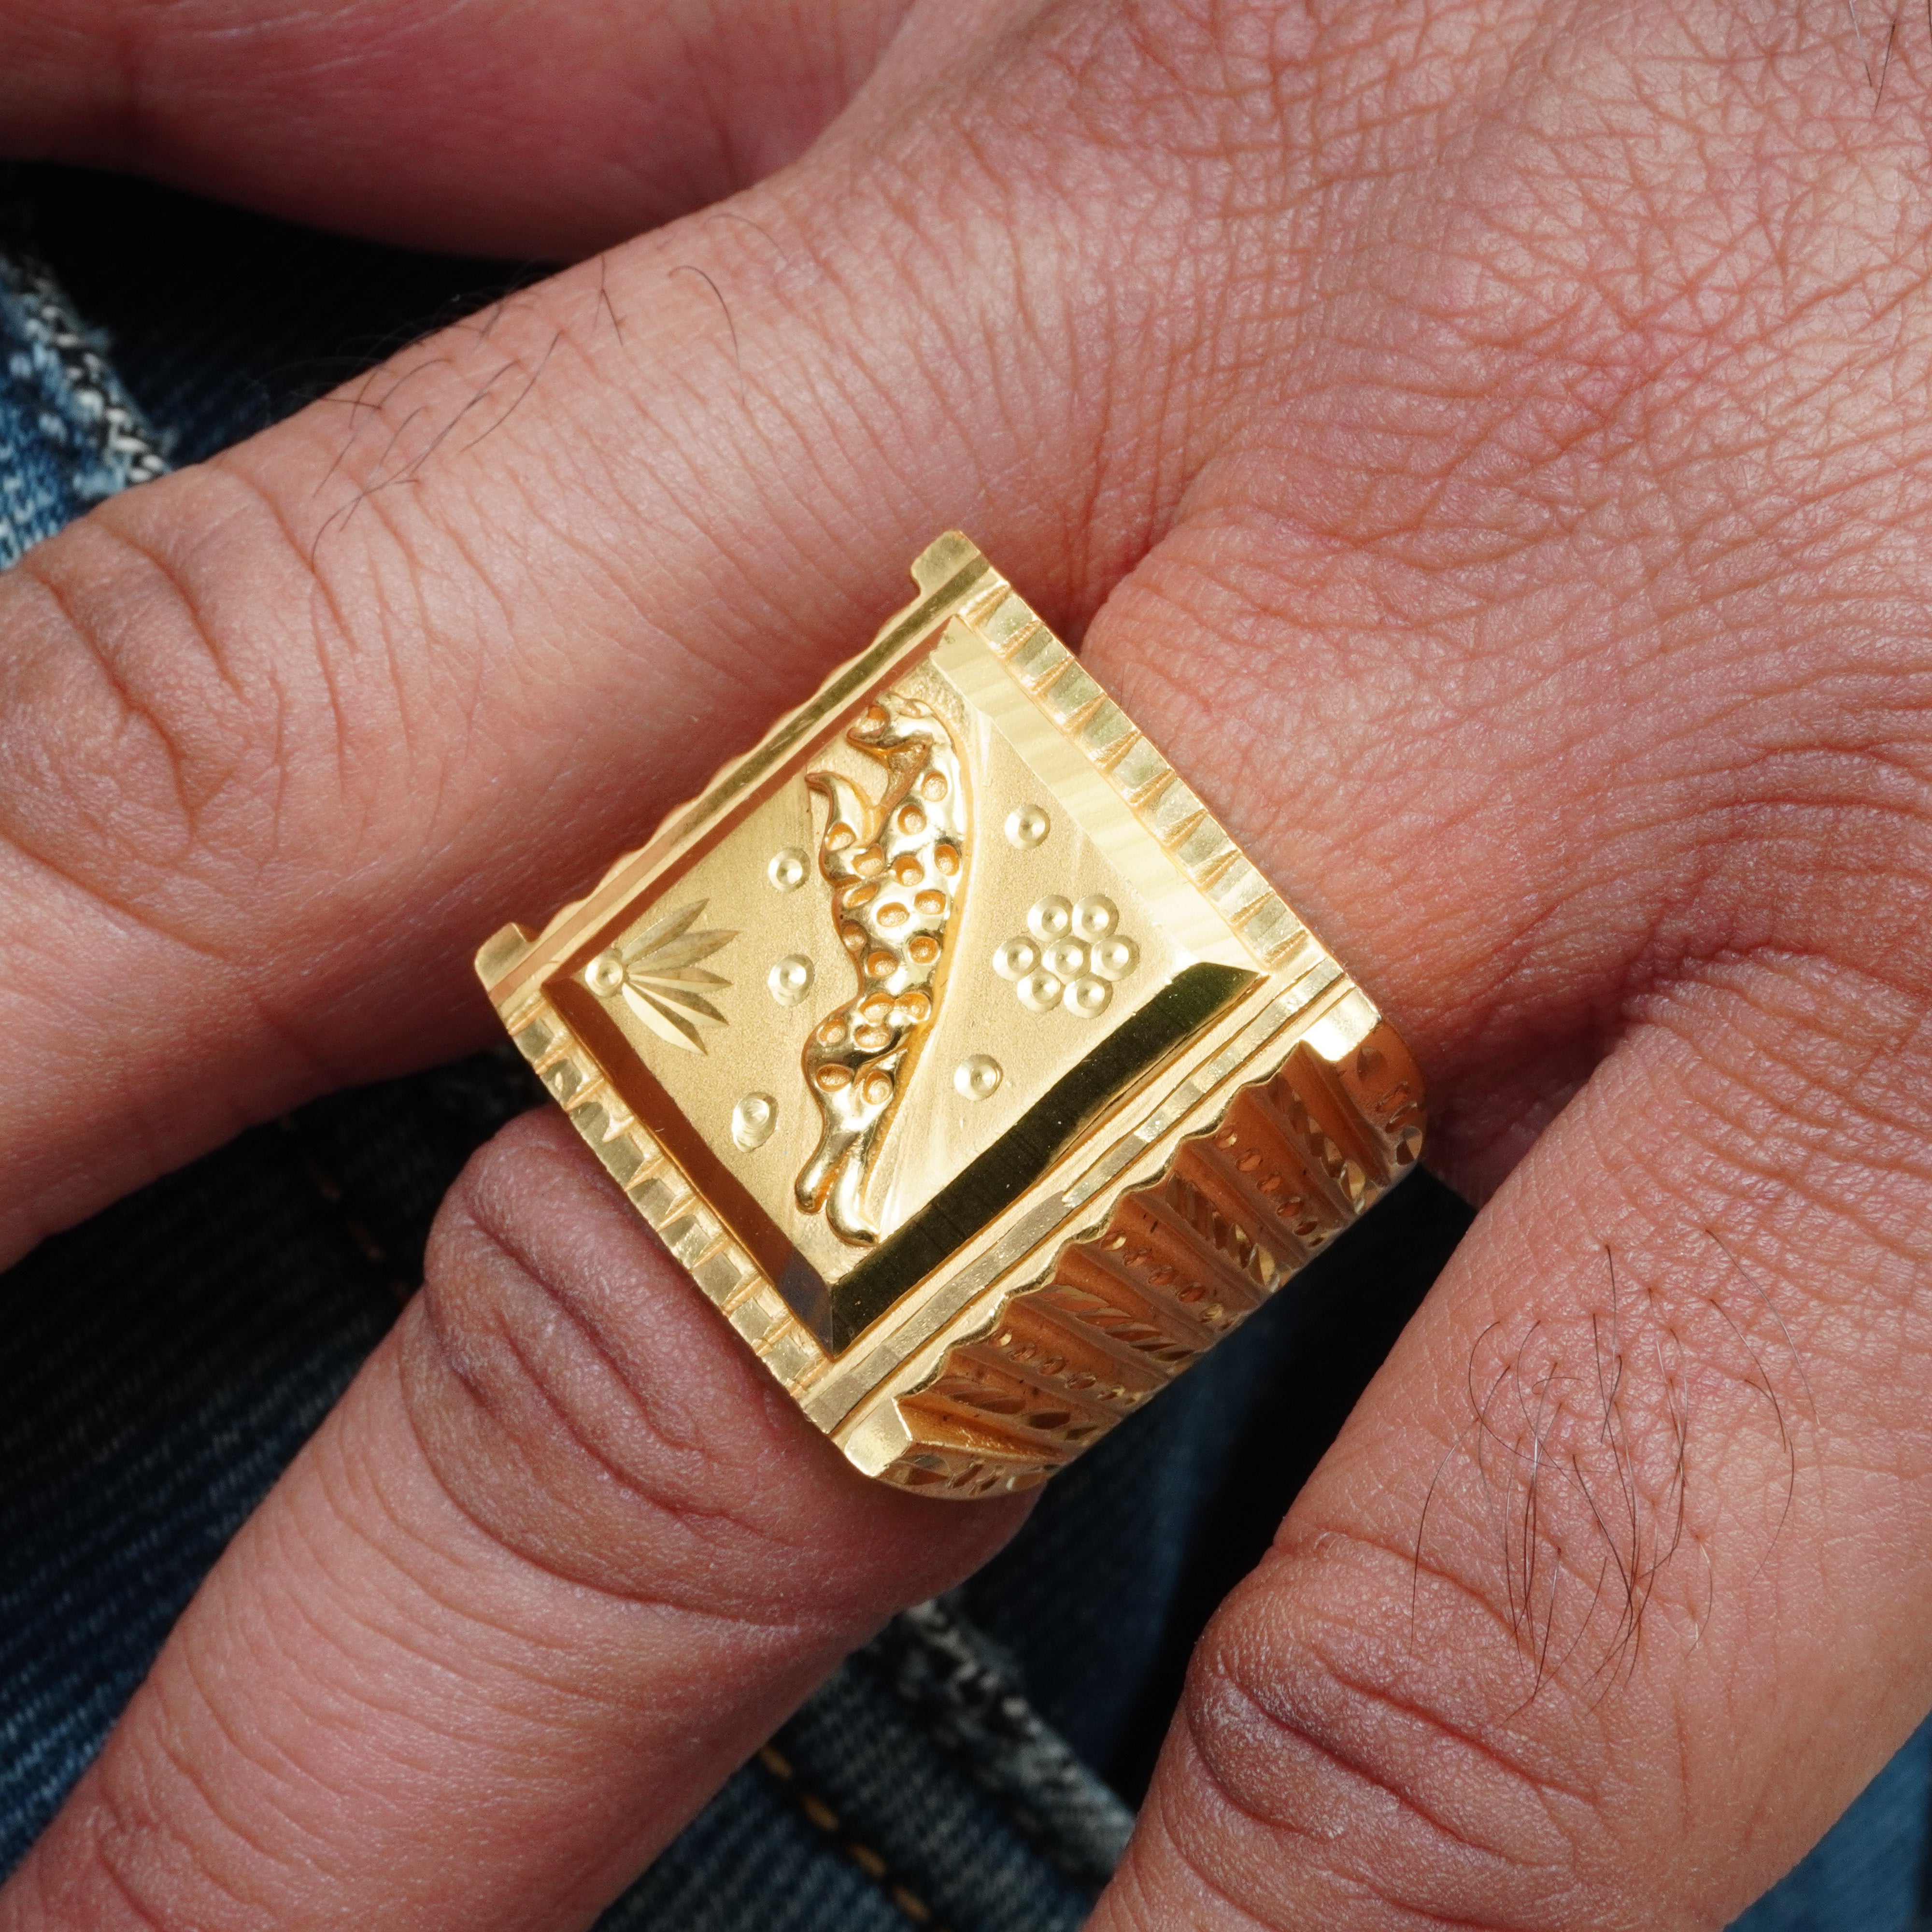 Rk jewellery shop - Fenchi stylish jems gold ring..., | Facebook